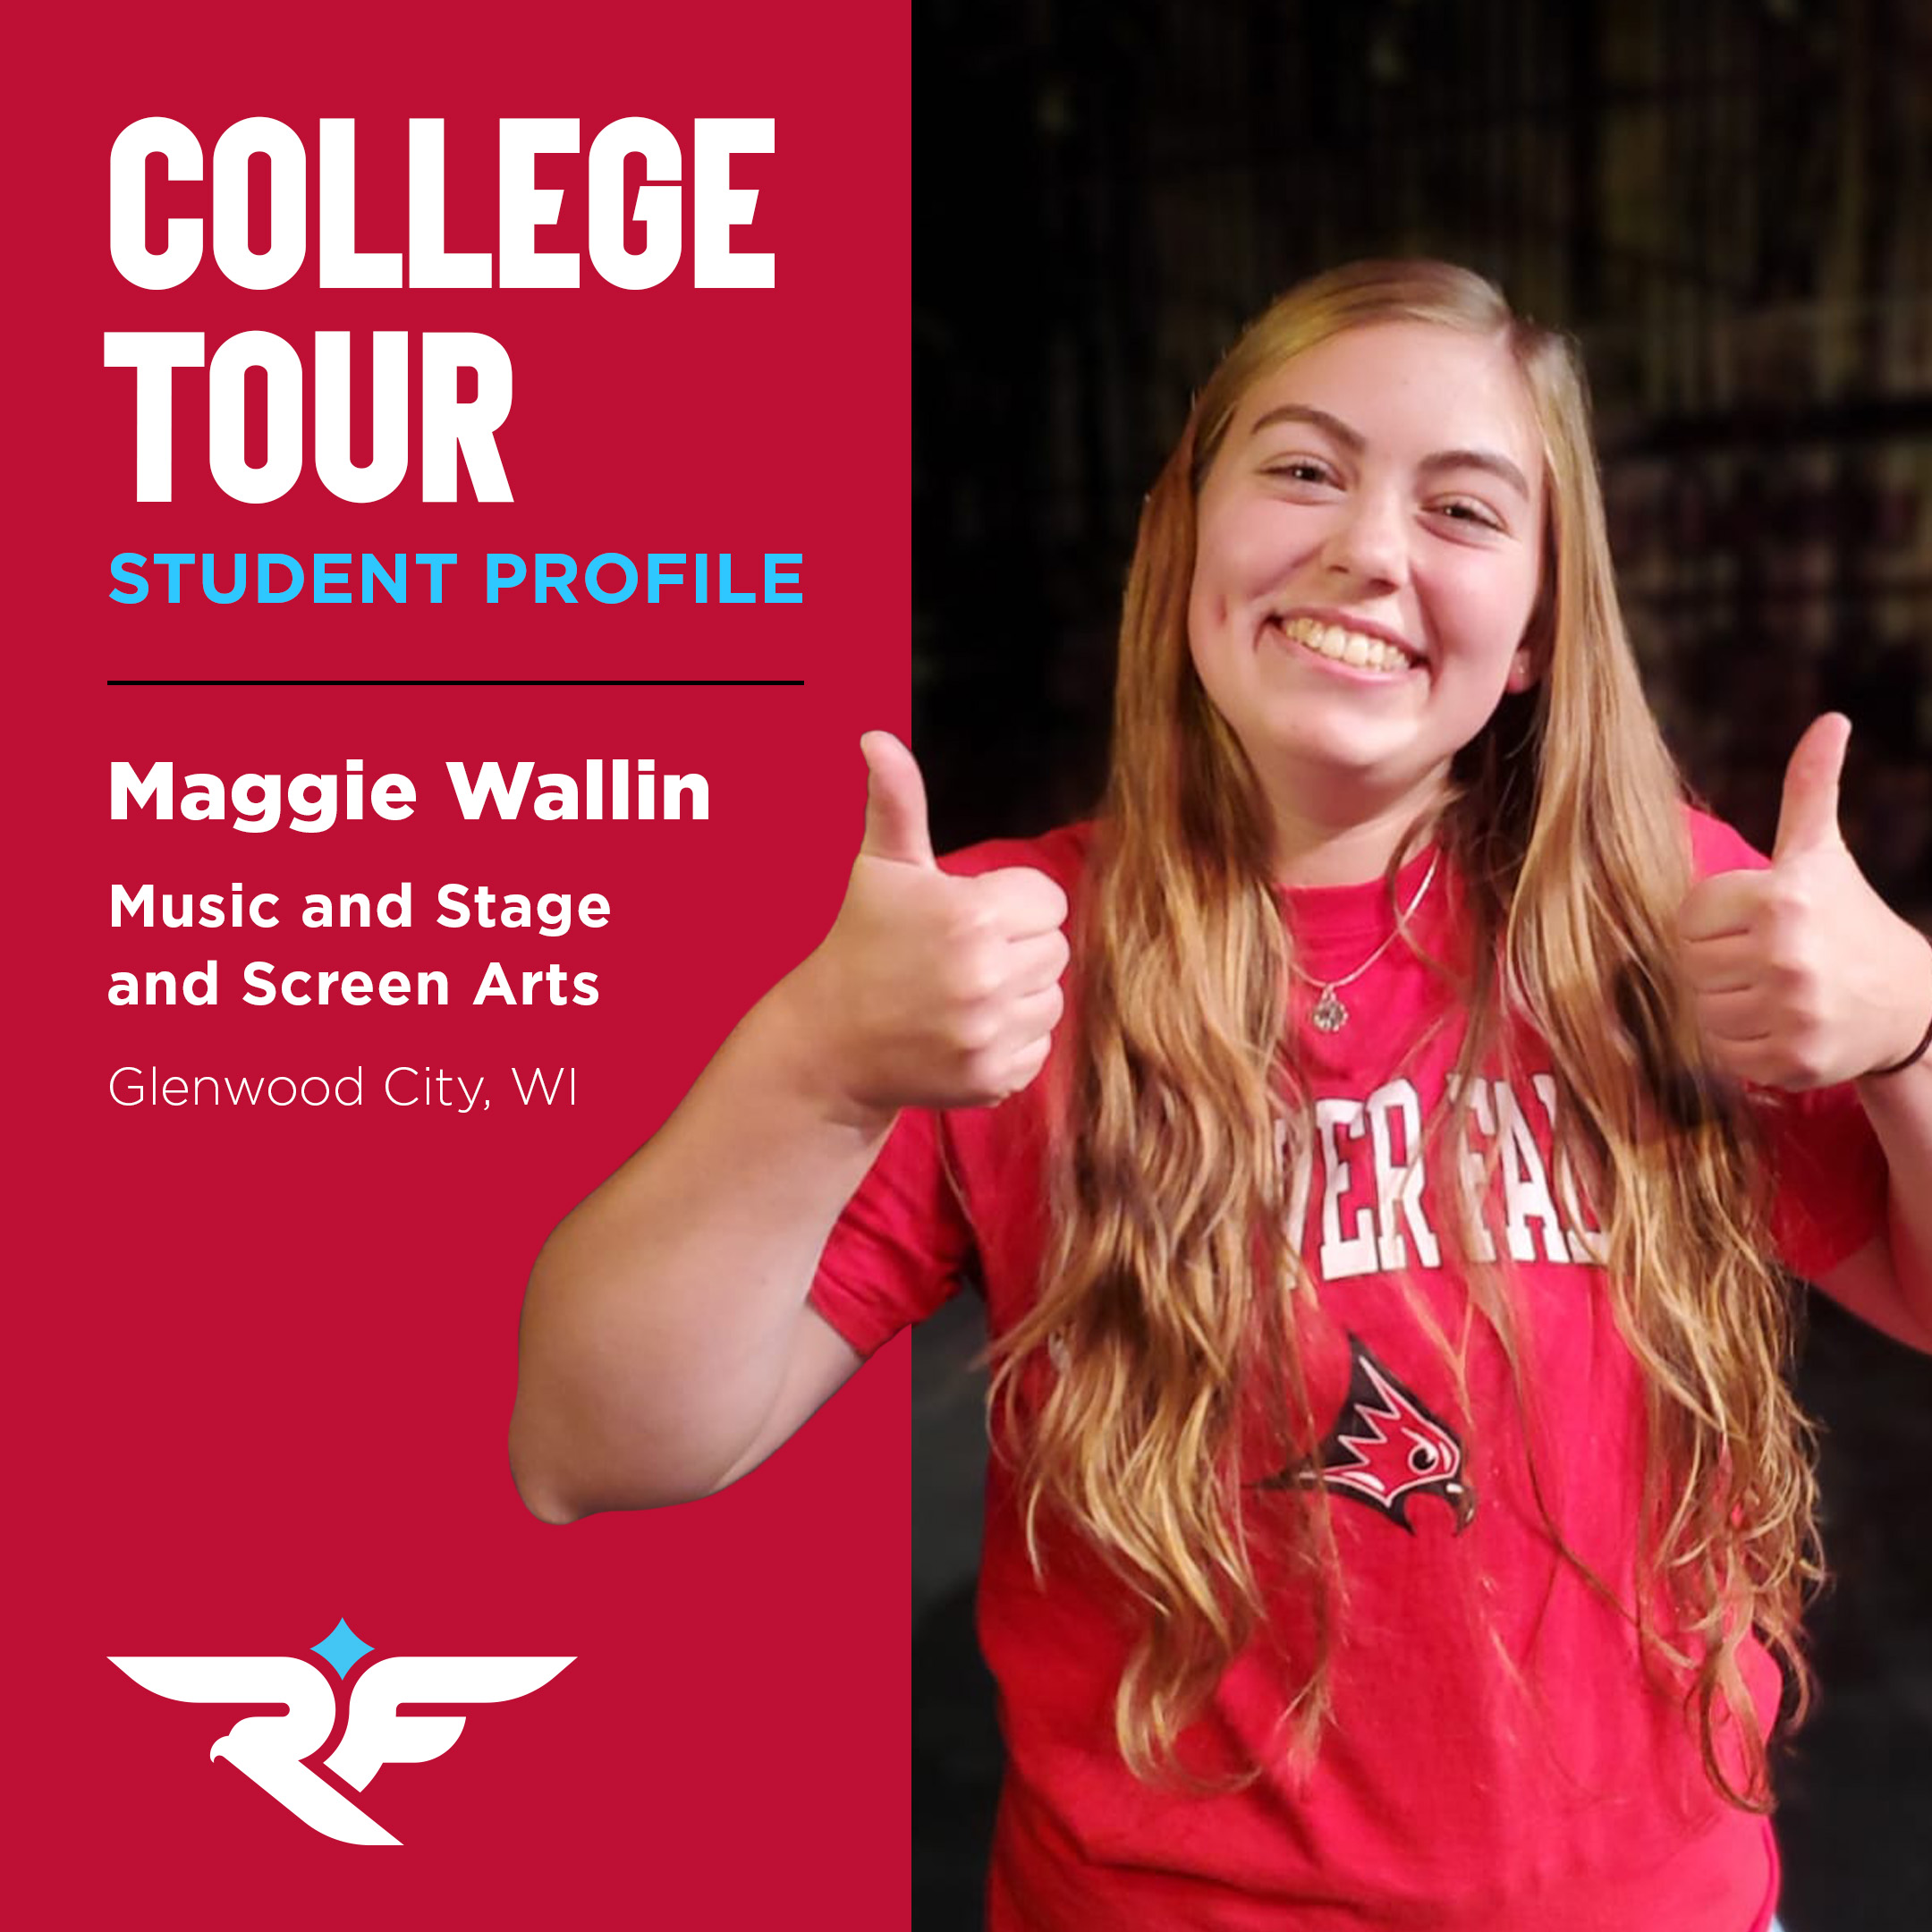 College Tour Maggie Wallin